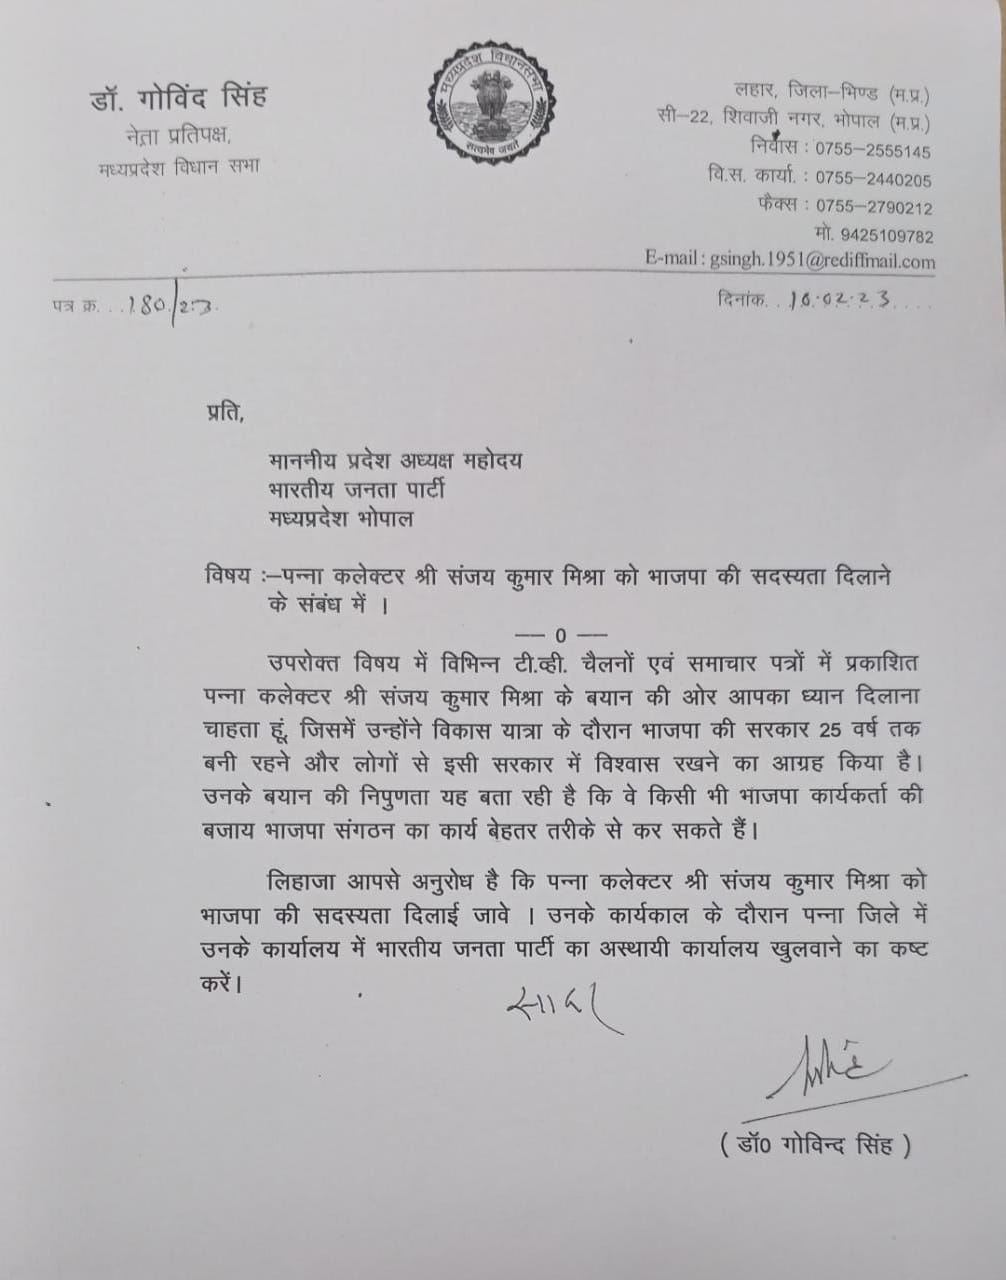 Congress leader Govind Singh wrote letter to BJP President VD Sharma